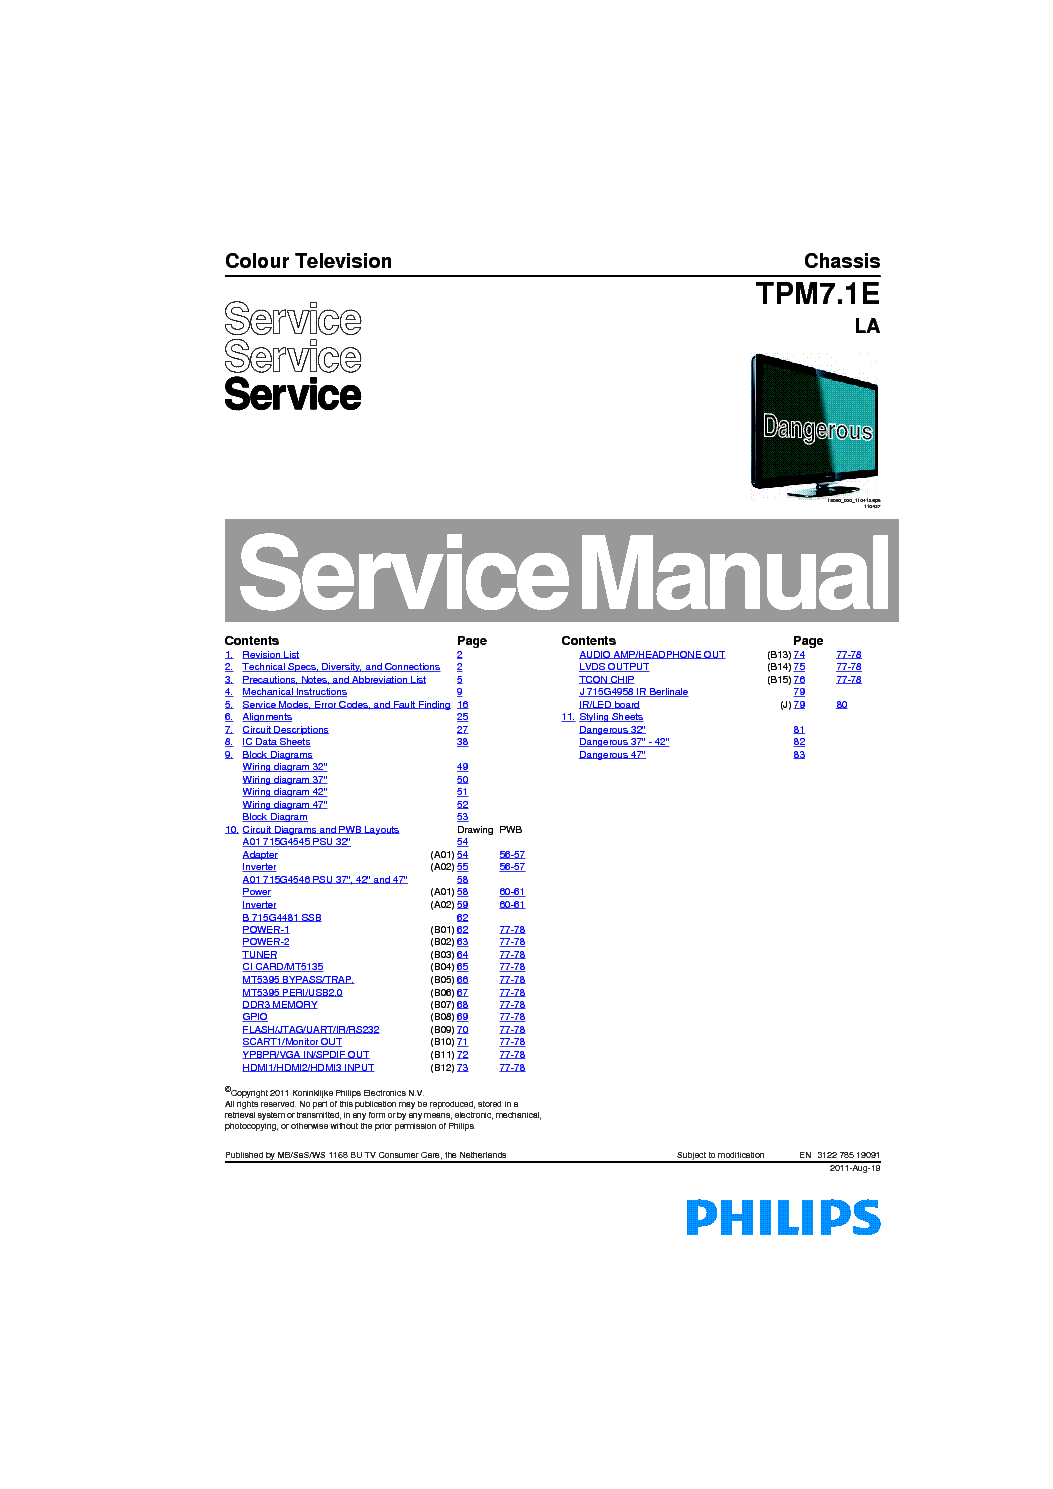 PHILIPS 42PFL4506H CHASSIS TPM7.1E LA service manual (1st page)